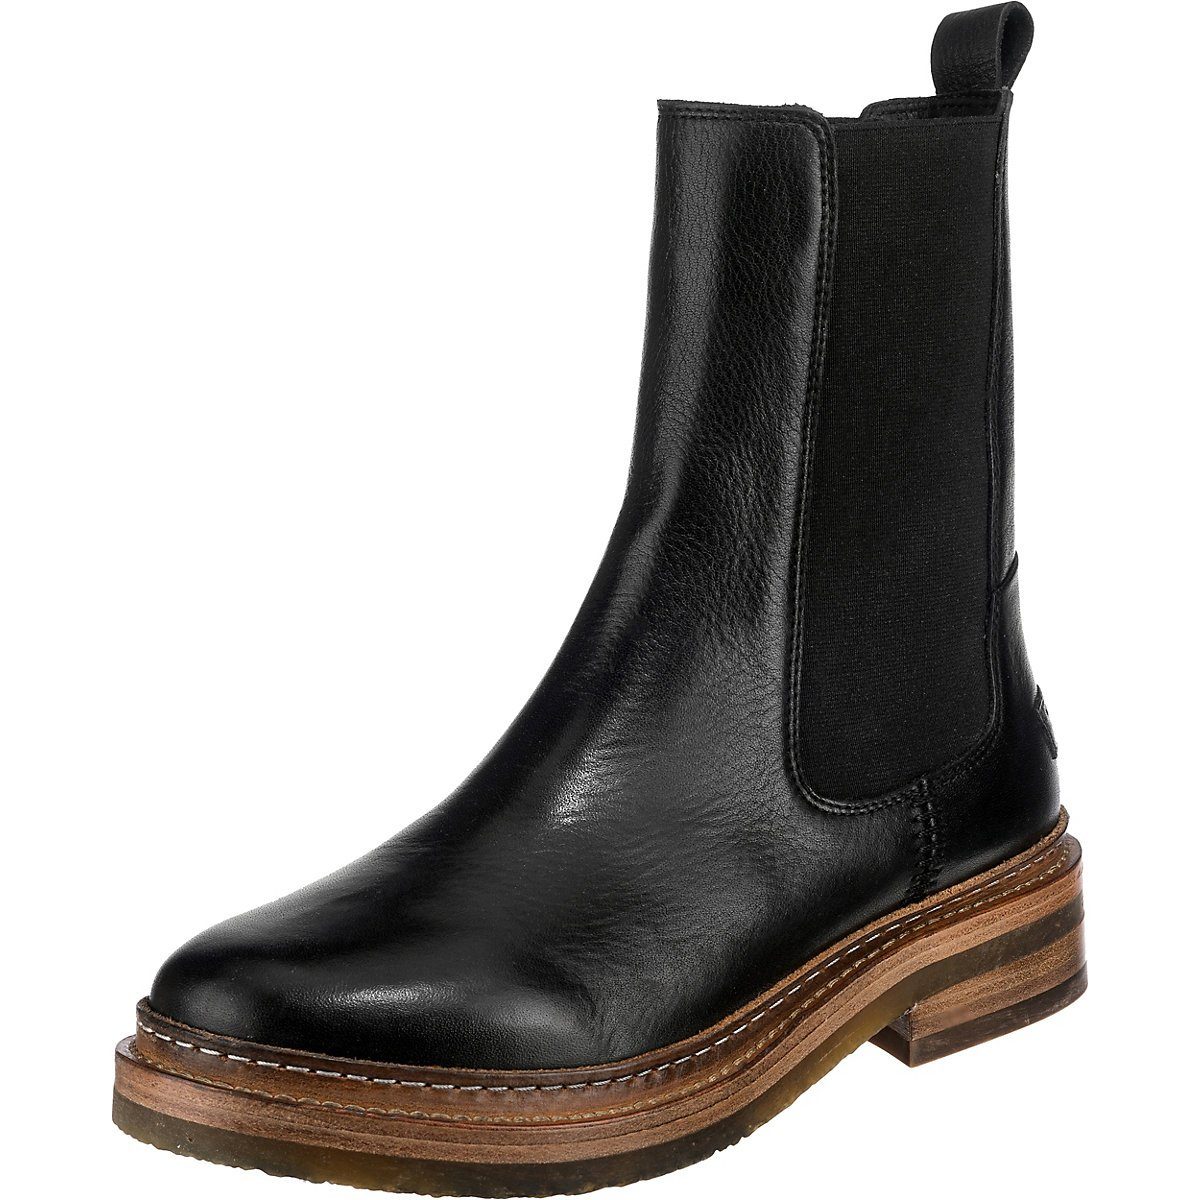 Schuhe Boots Shabbies Amsterdam Shs0995 Chelsea Boot Waxed Leather Chelsea Boots Chelseaboots